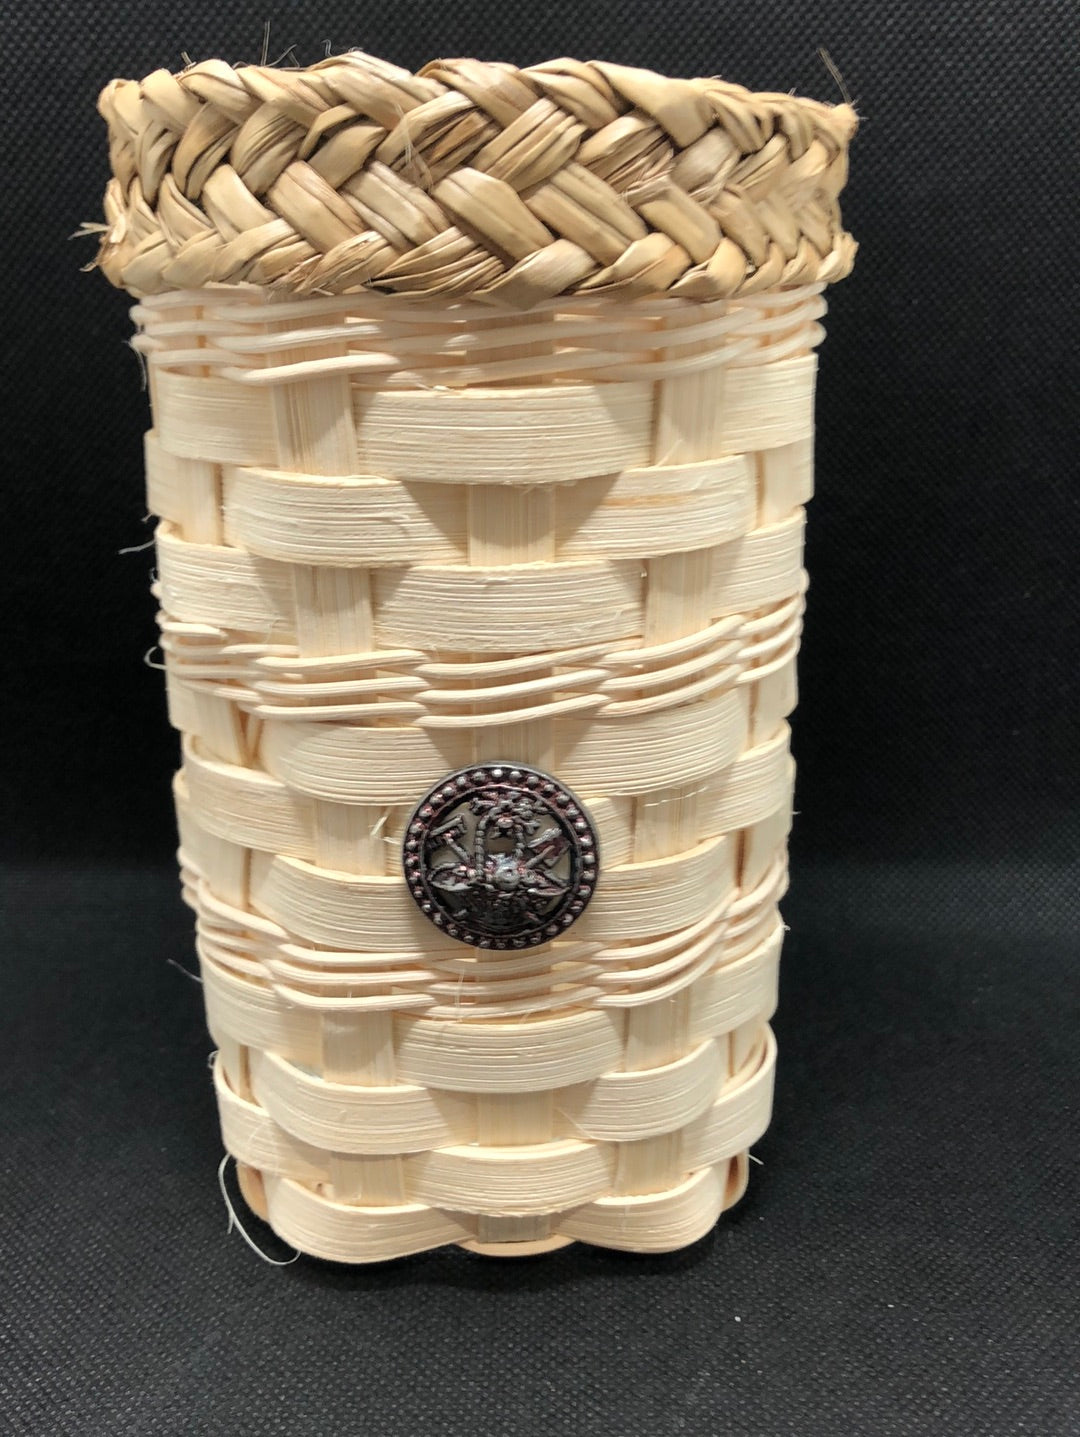 Locally Handwoven Basket Vase